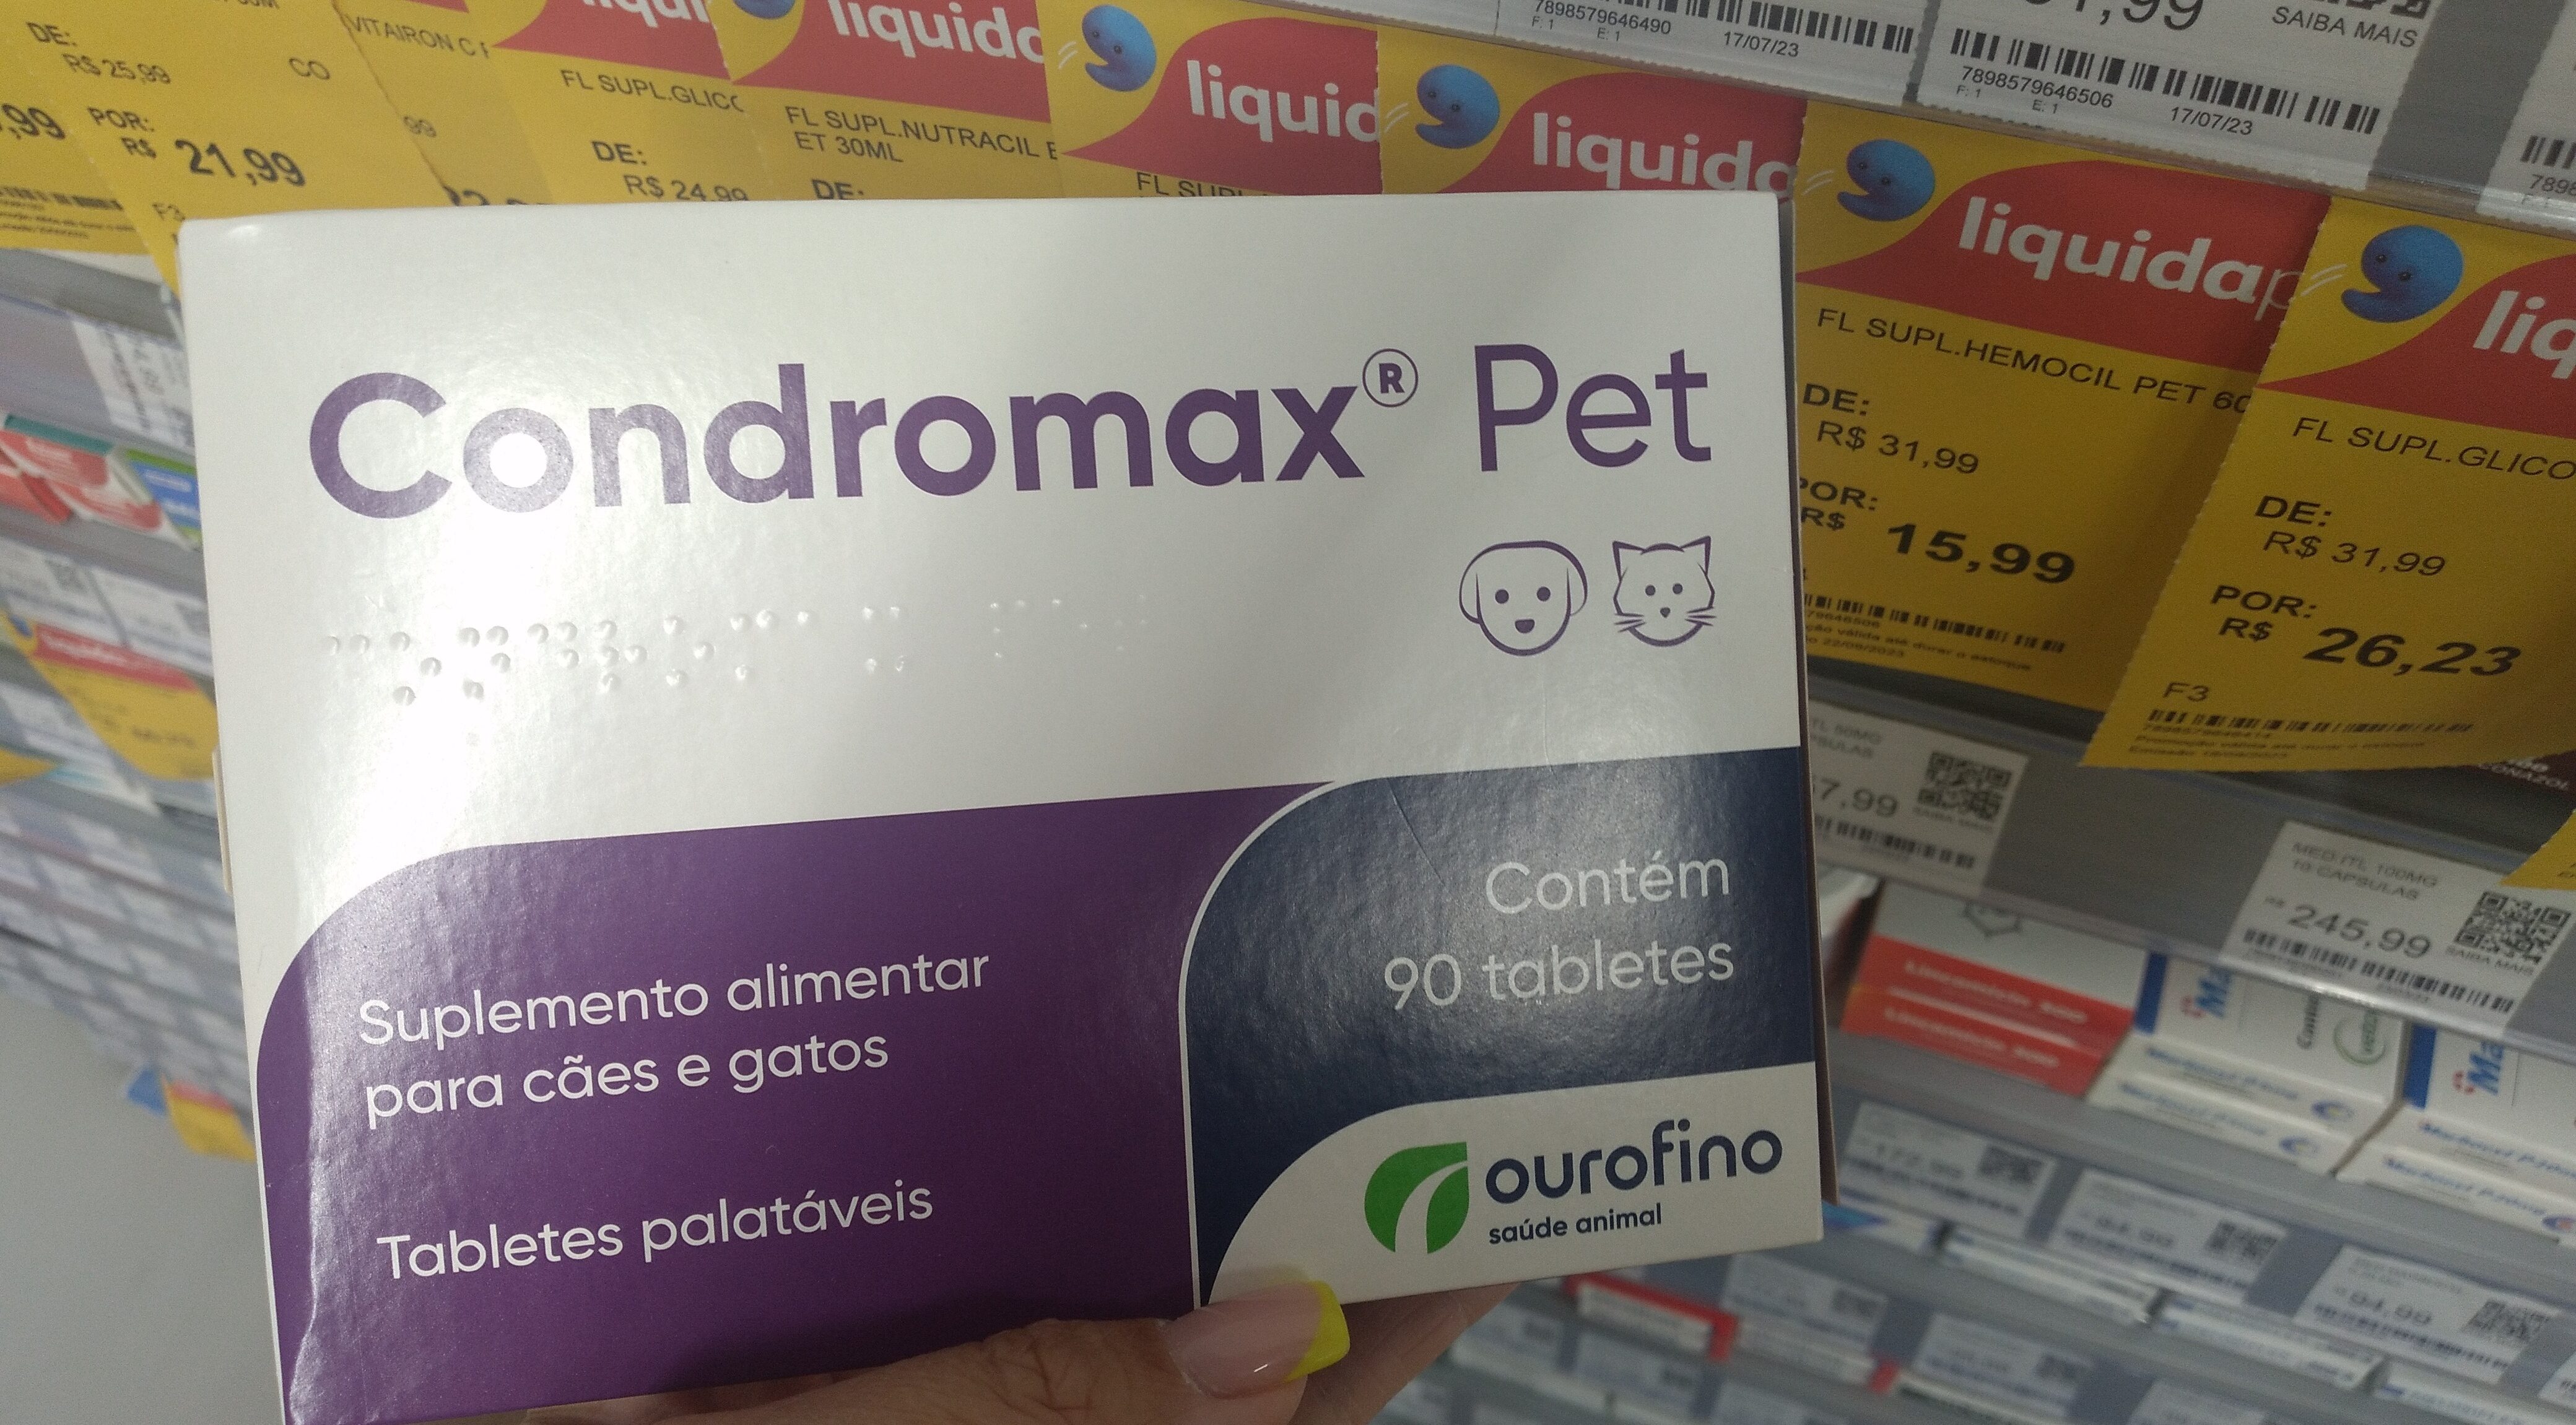 Condromax pet - Product - pt